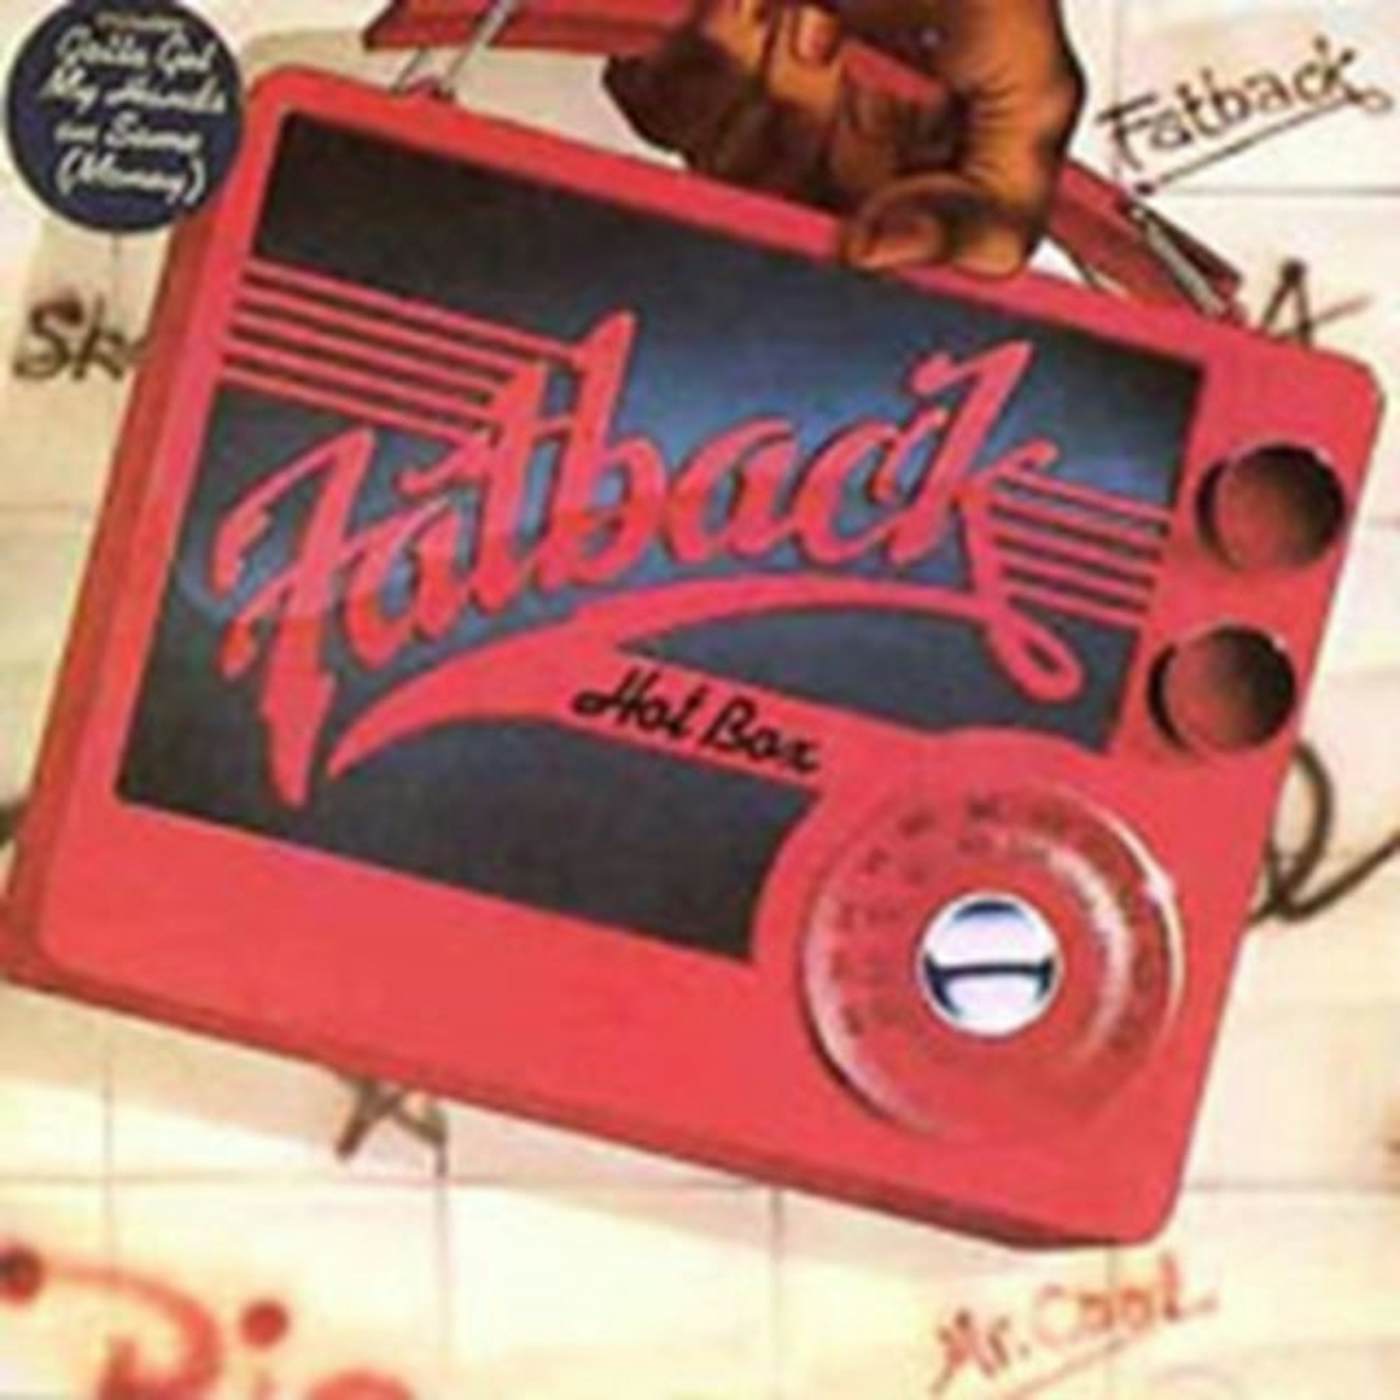 Fatback Band CD - Hot Box